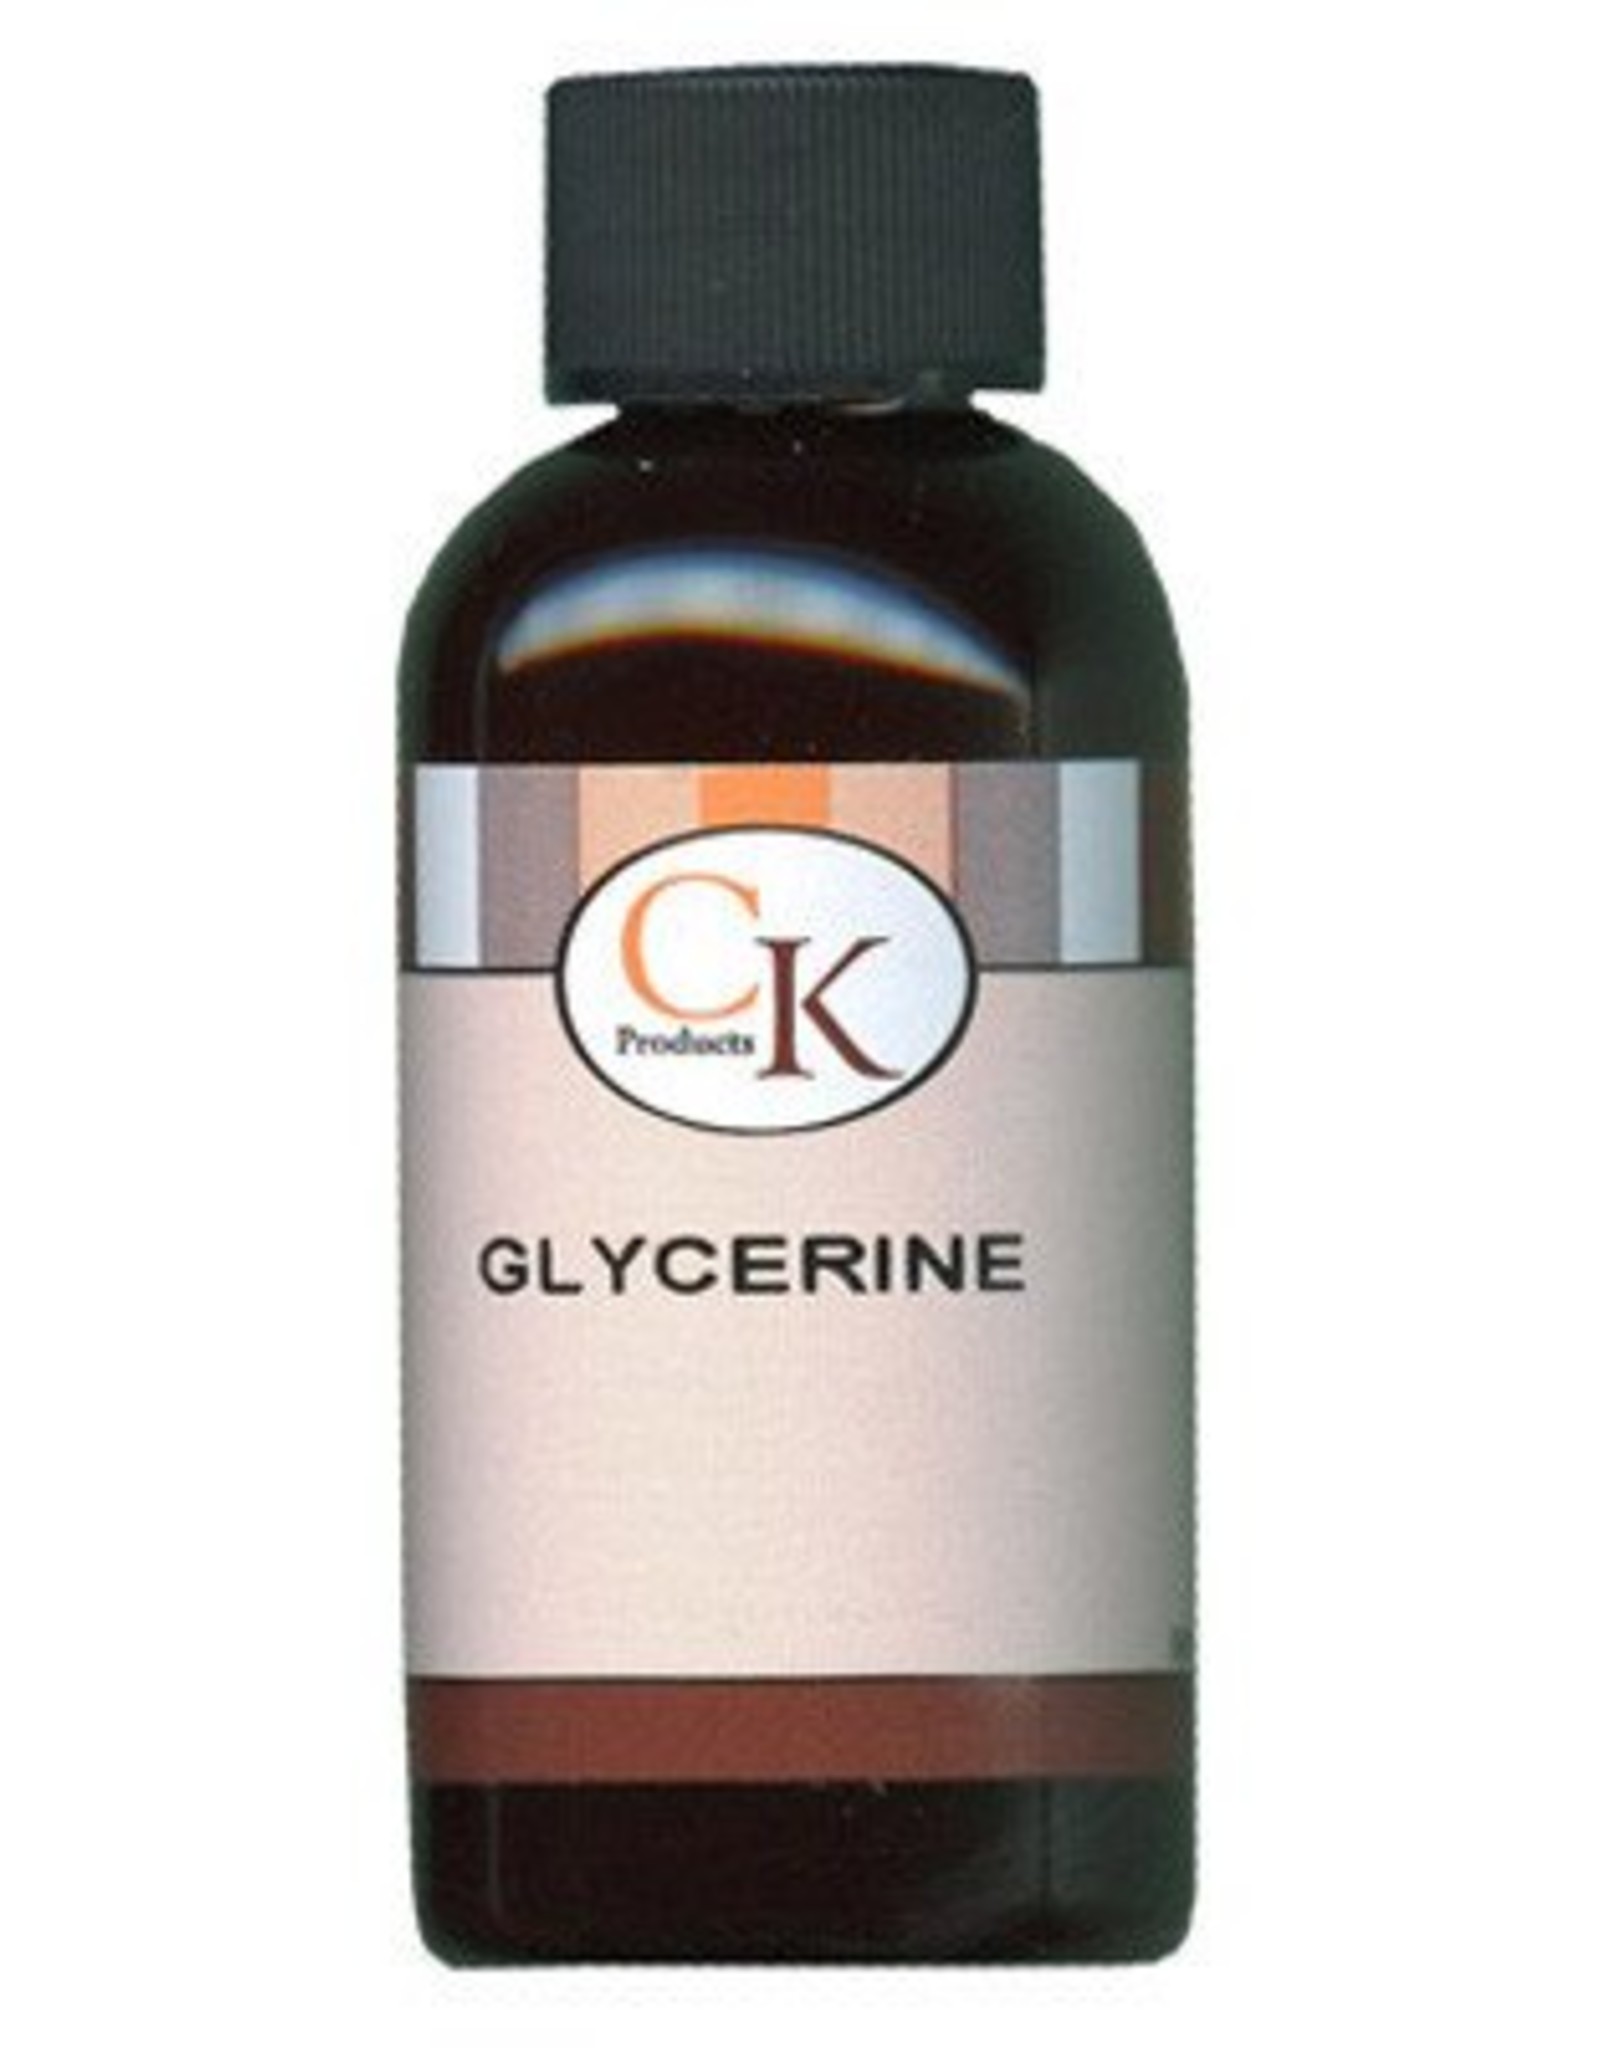 Glycerine (2.0 oz.)